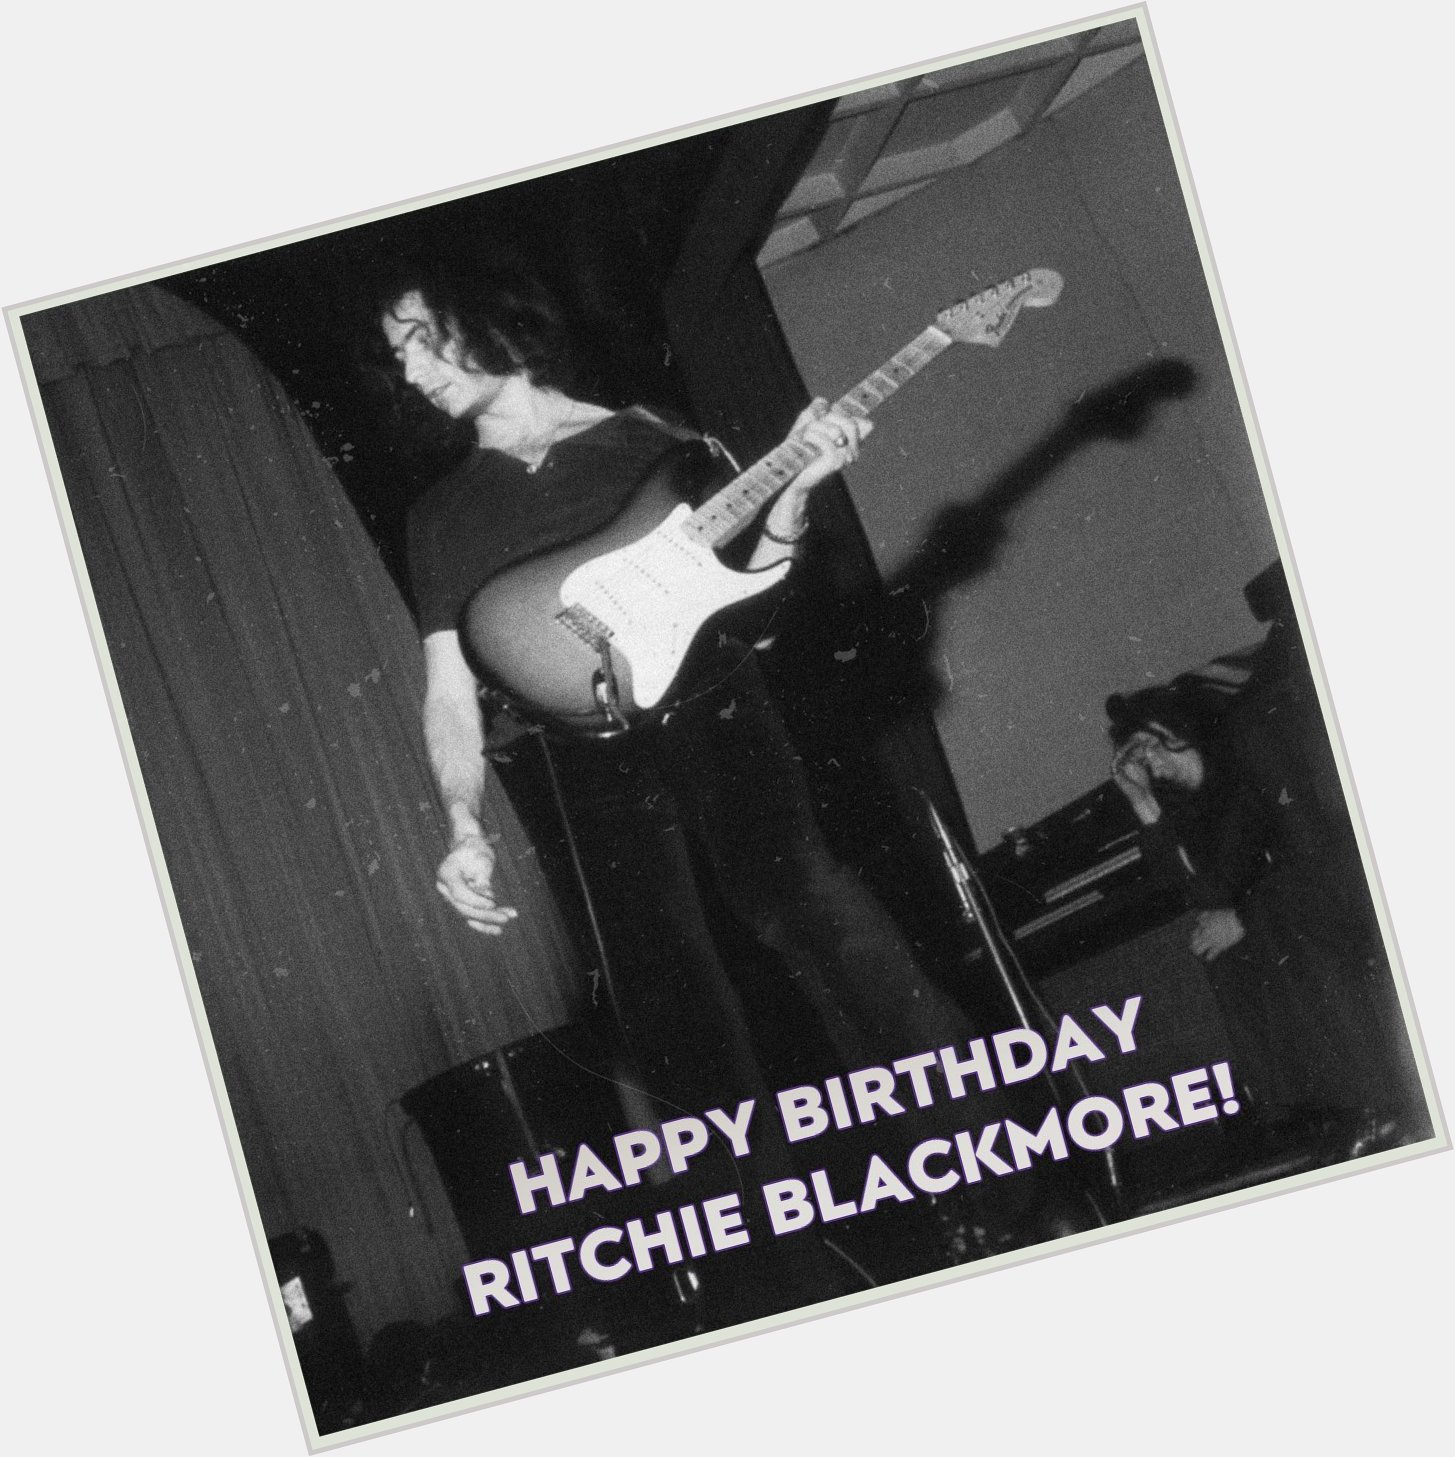 Happy birthday Ritchie Blackmore! 